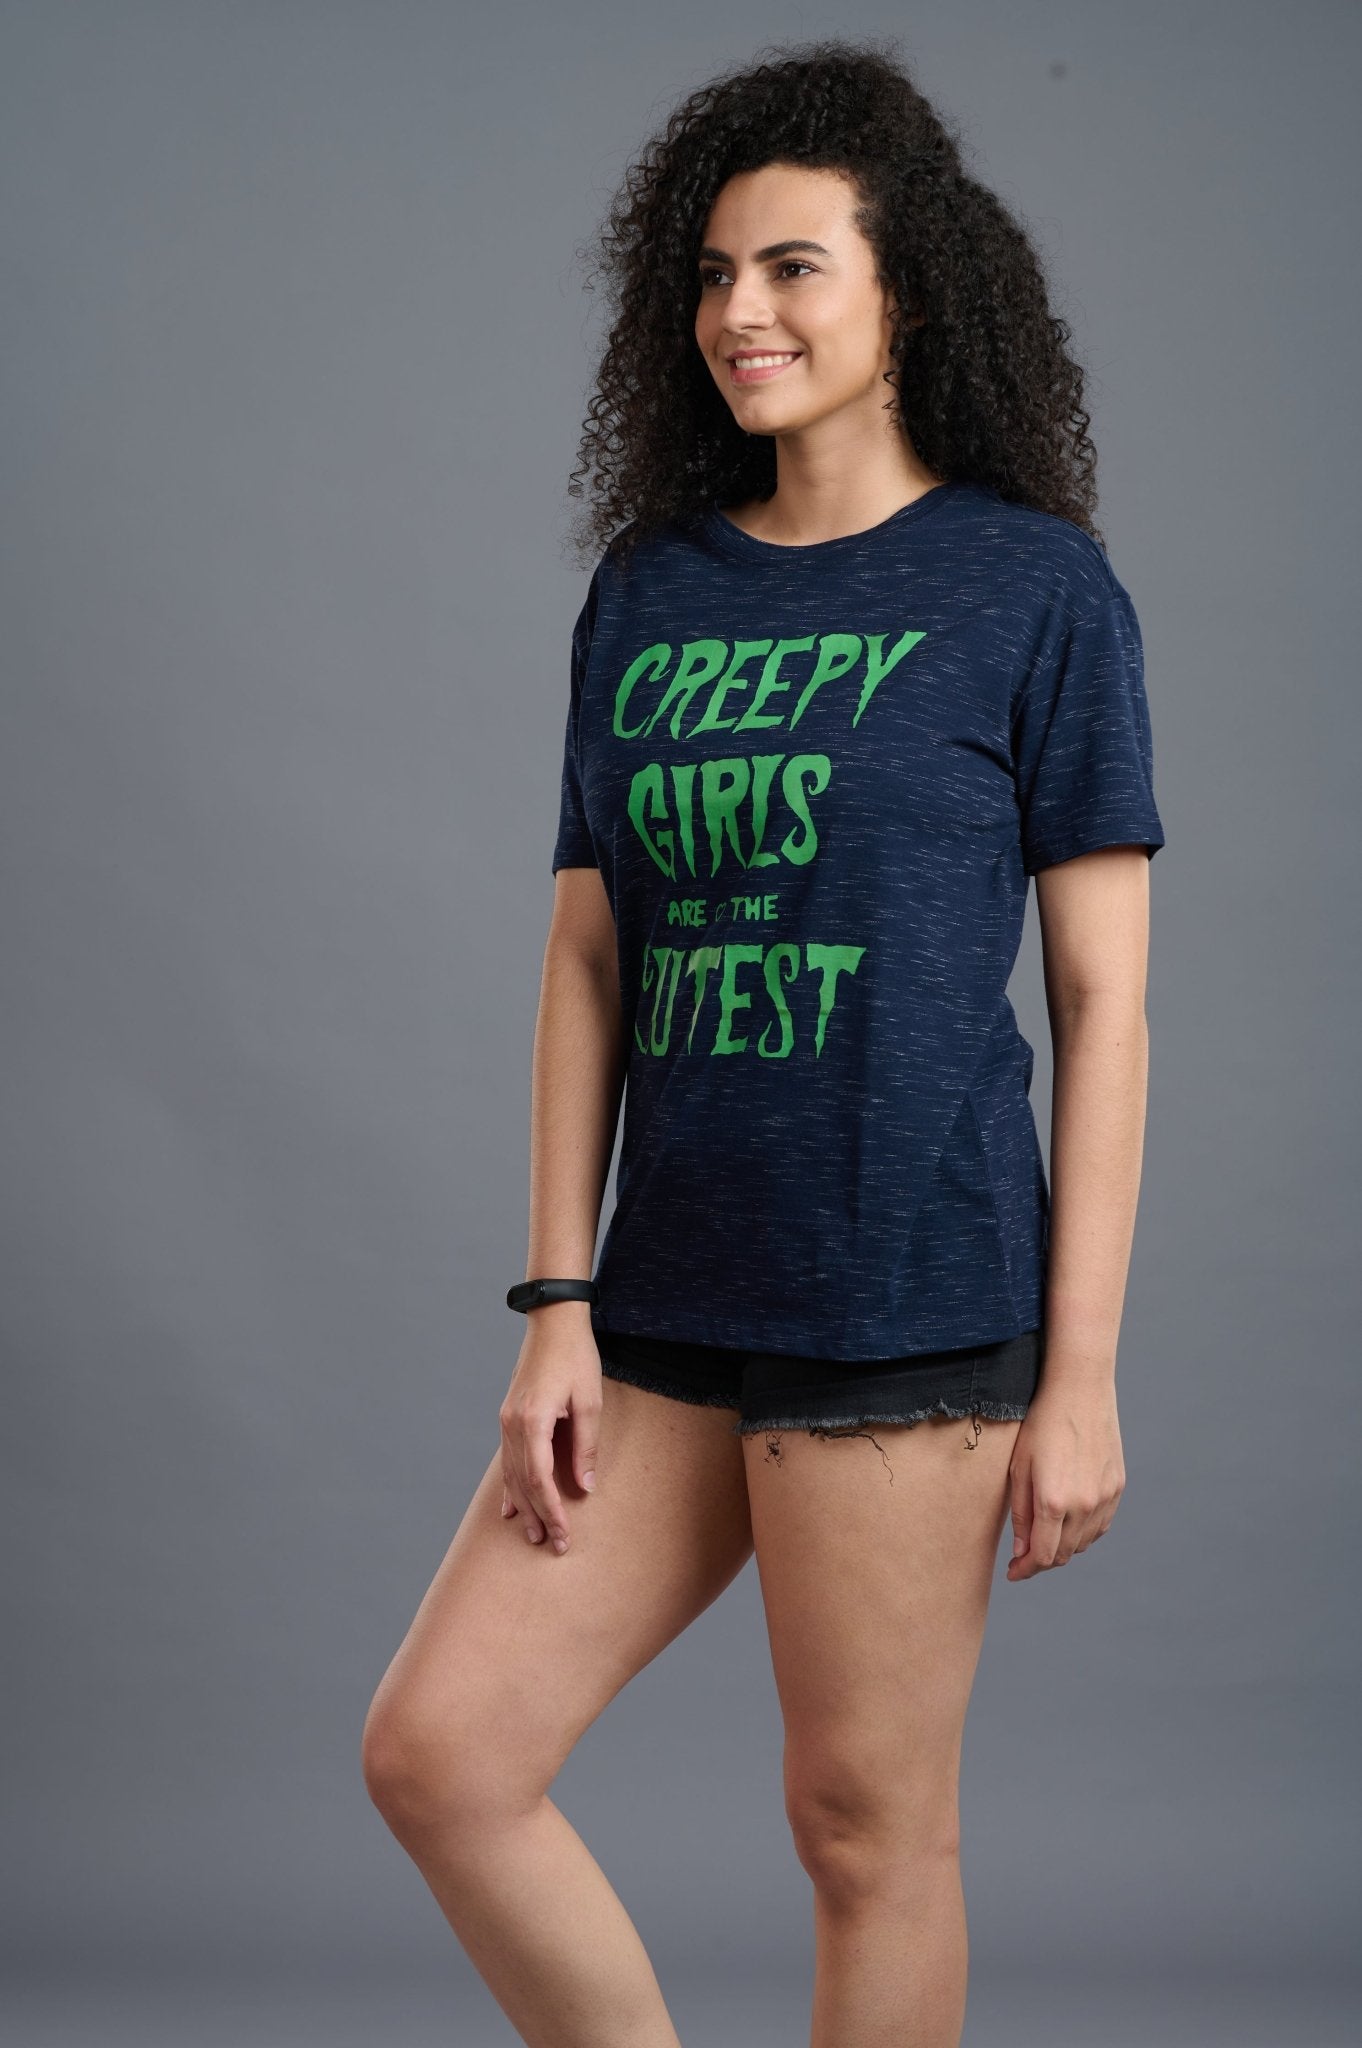 Creepy Girls Are The Best Printed Oversized T-Shirt for Women - Go Devil